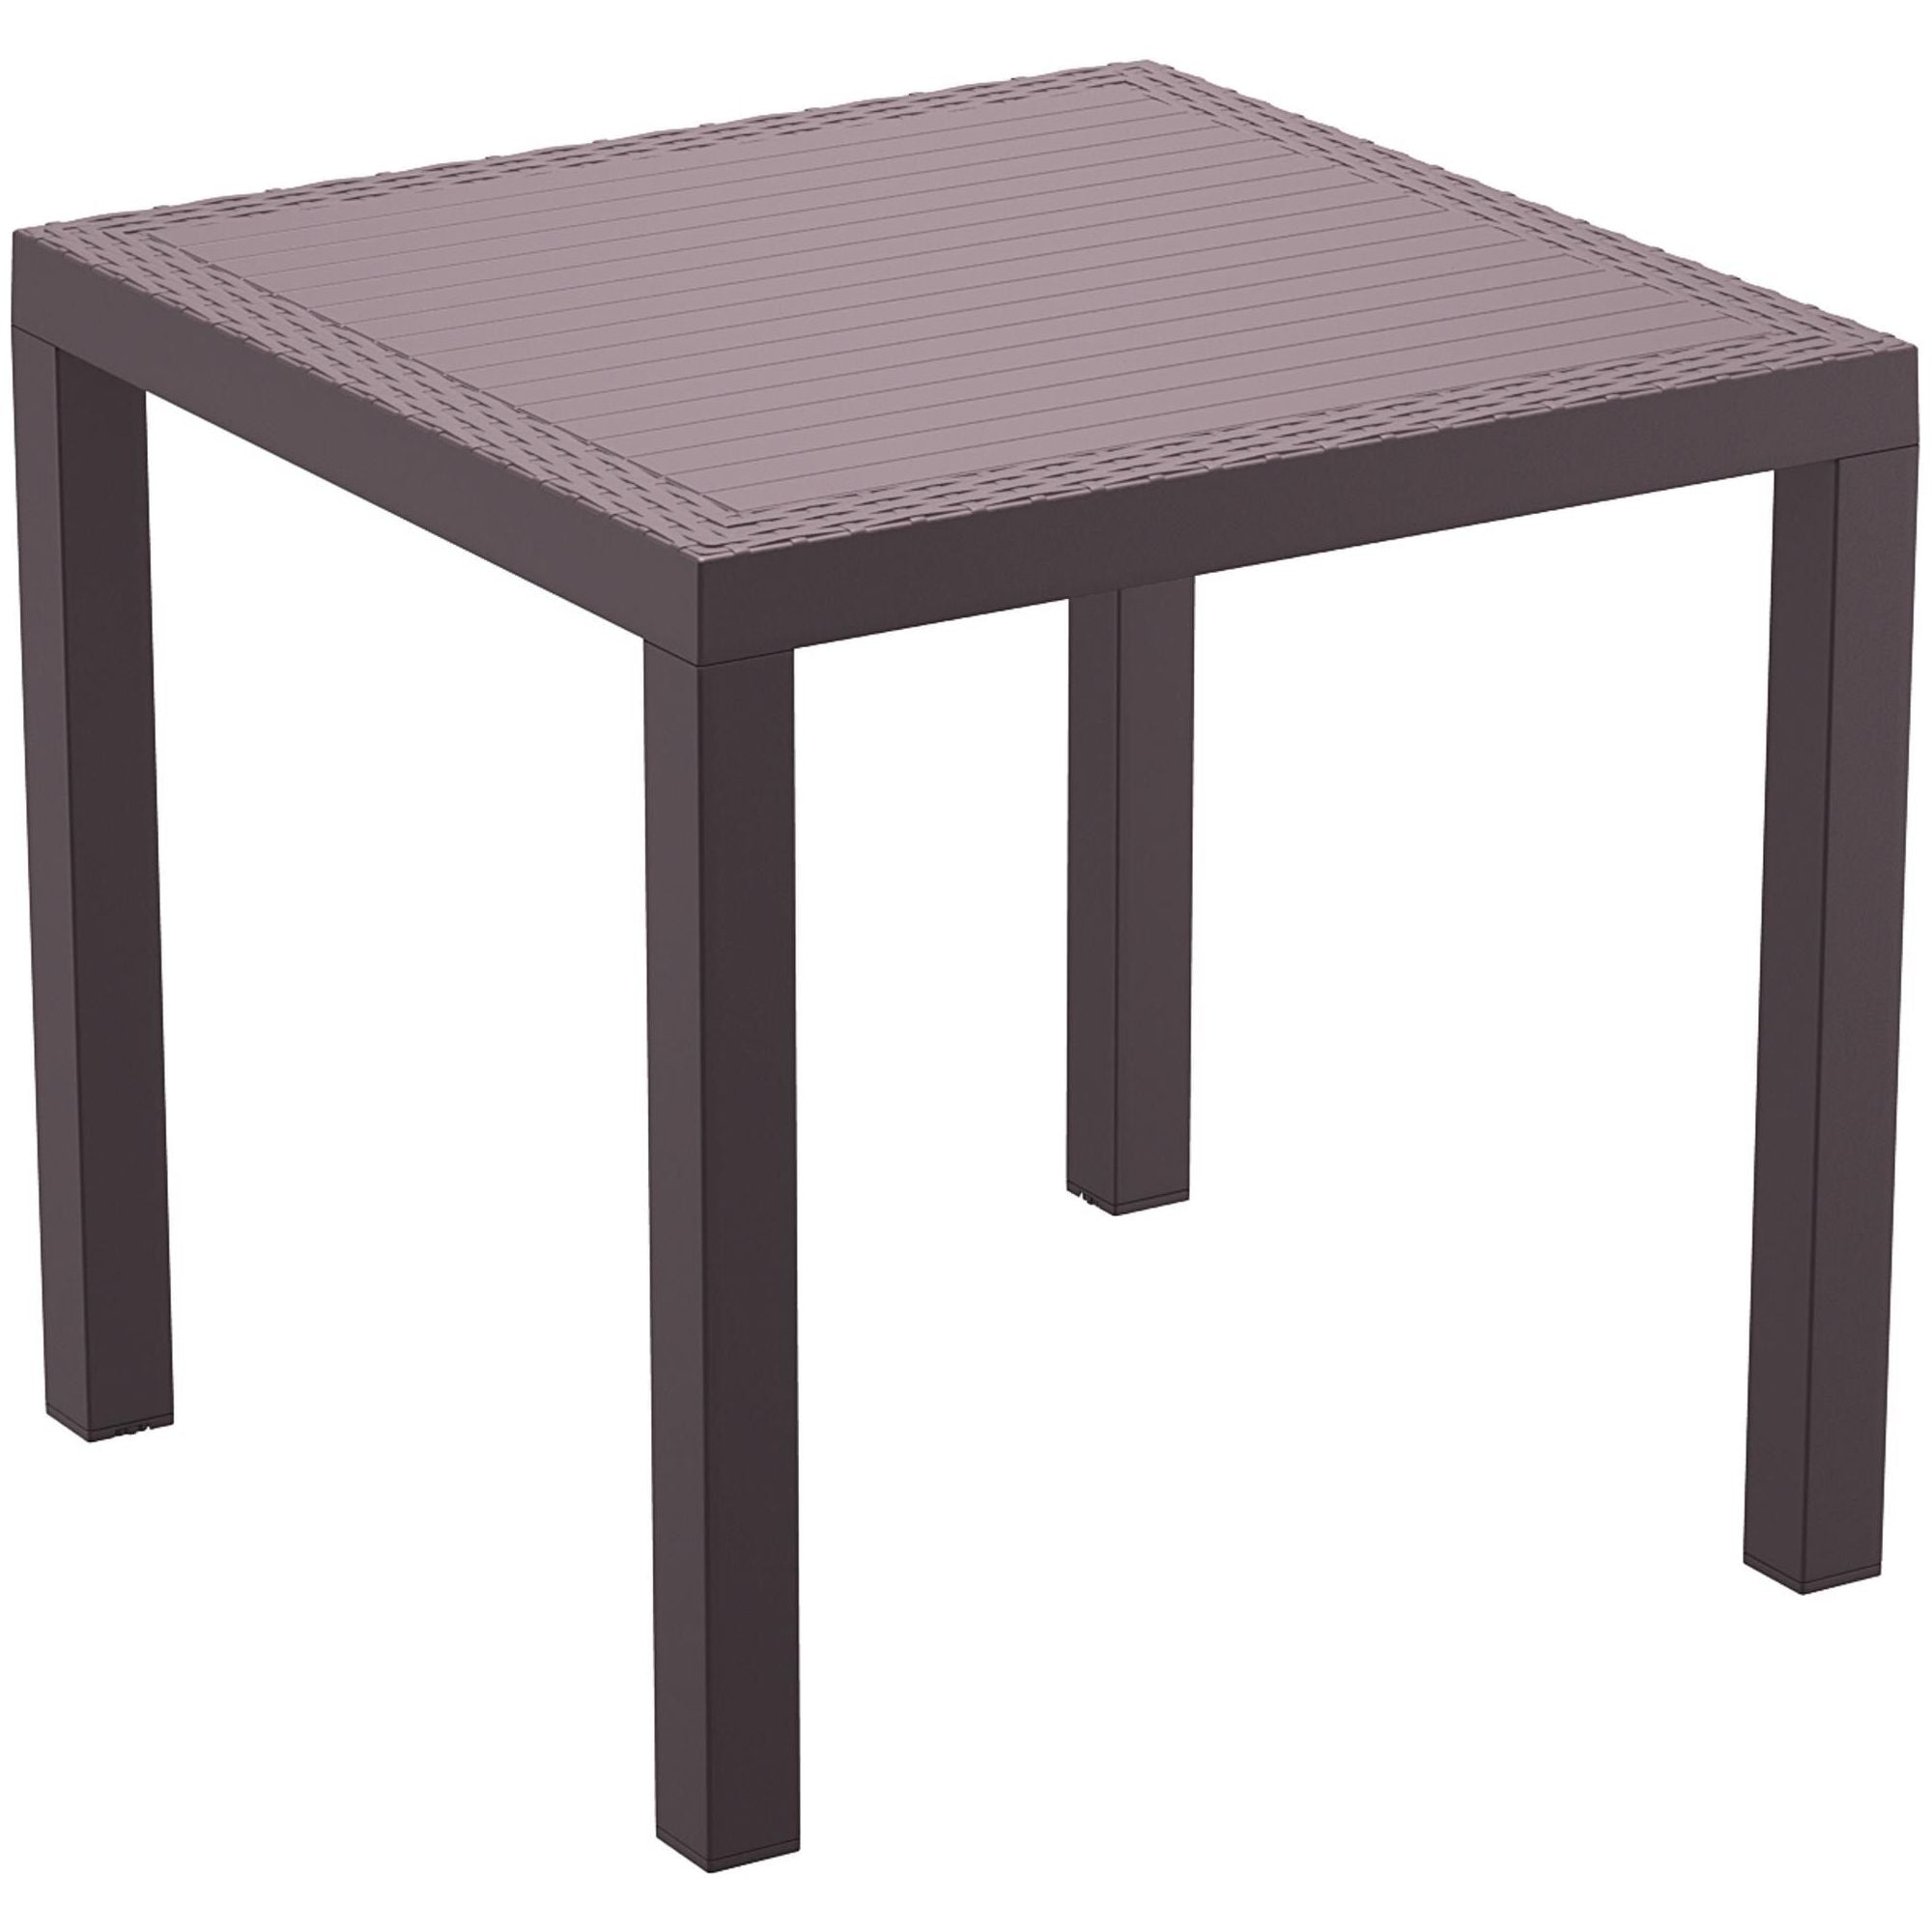 Garbar indian vierkante tafel 80x80 chocolade